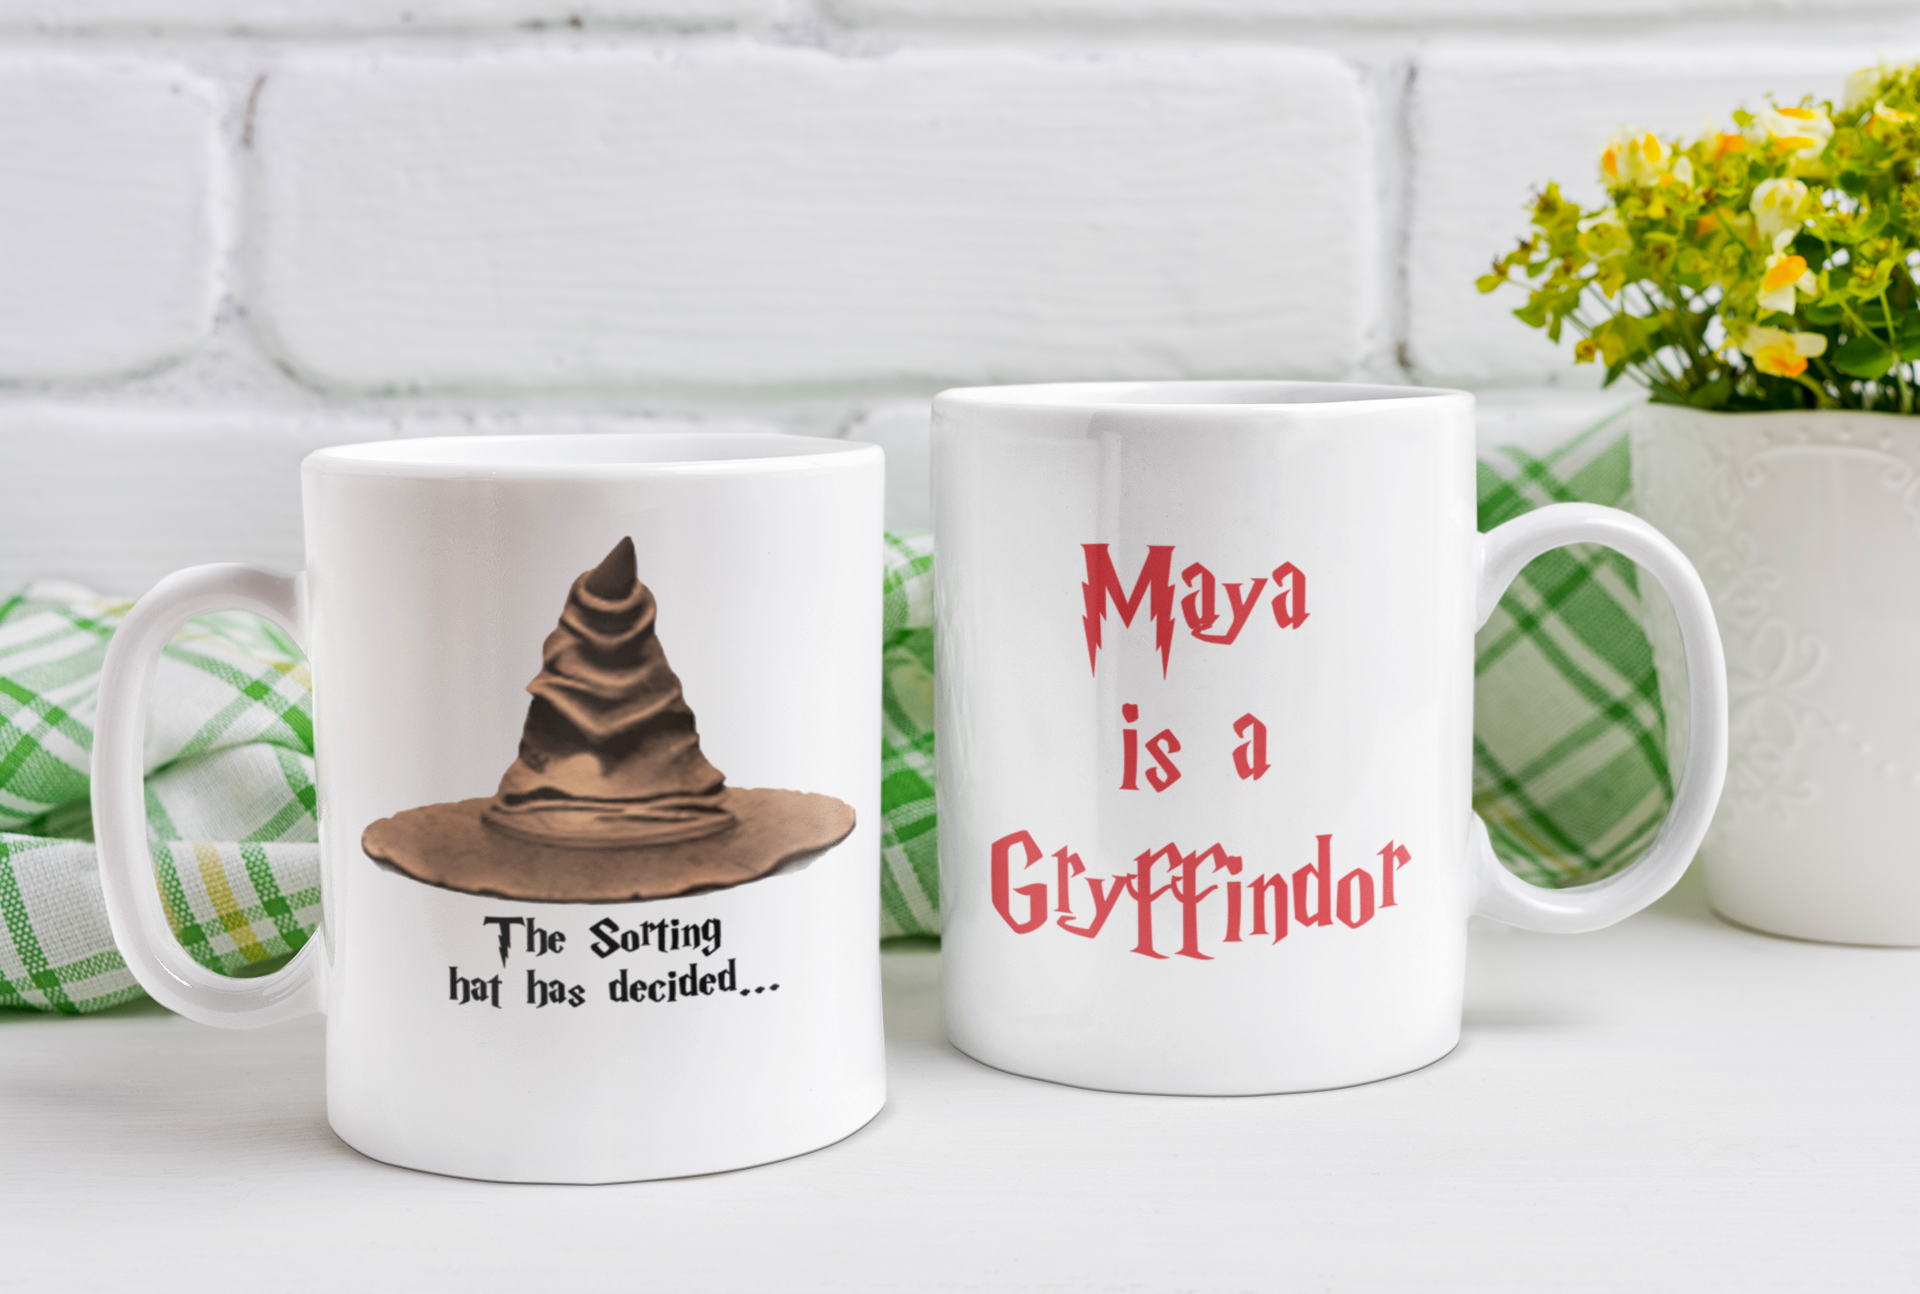 Harry Potter Mug  Harry Potter House Mug – Our Print Shop